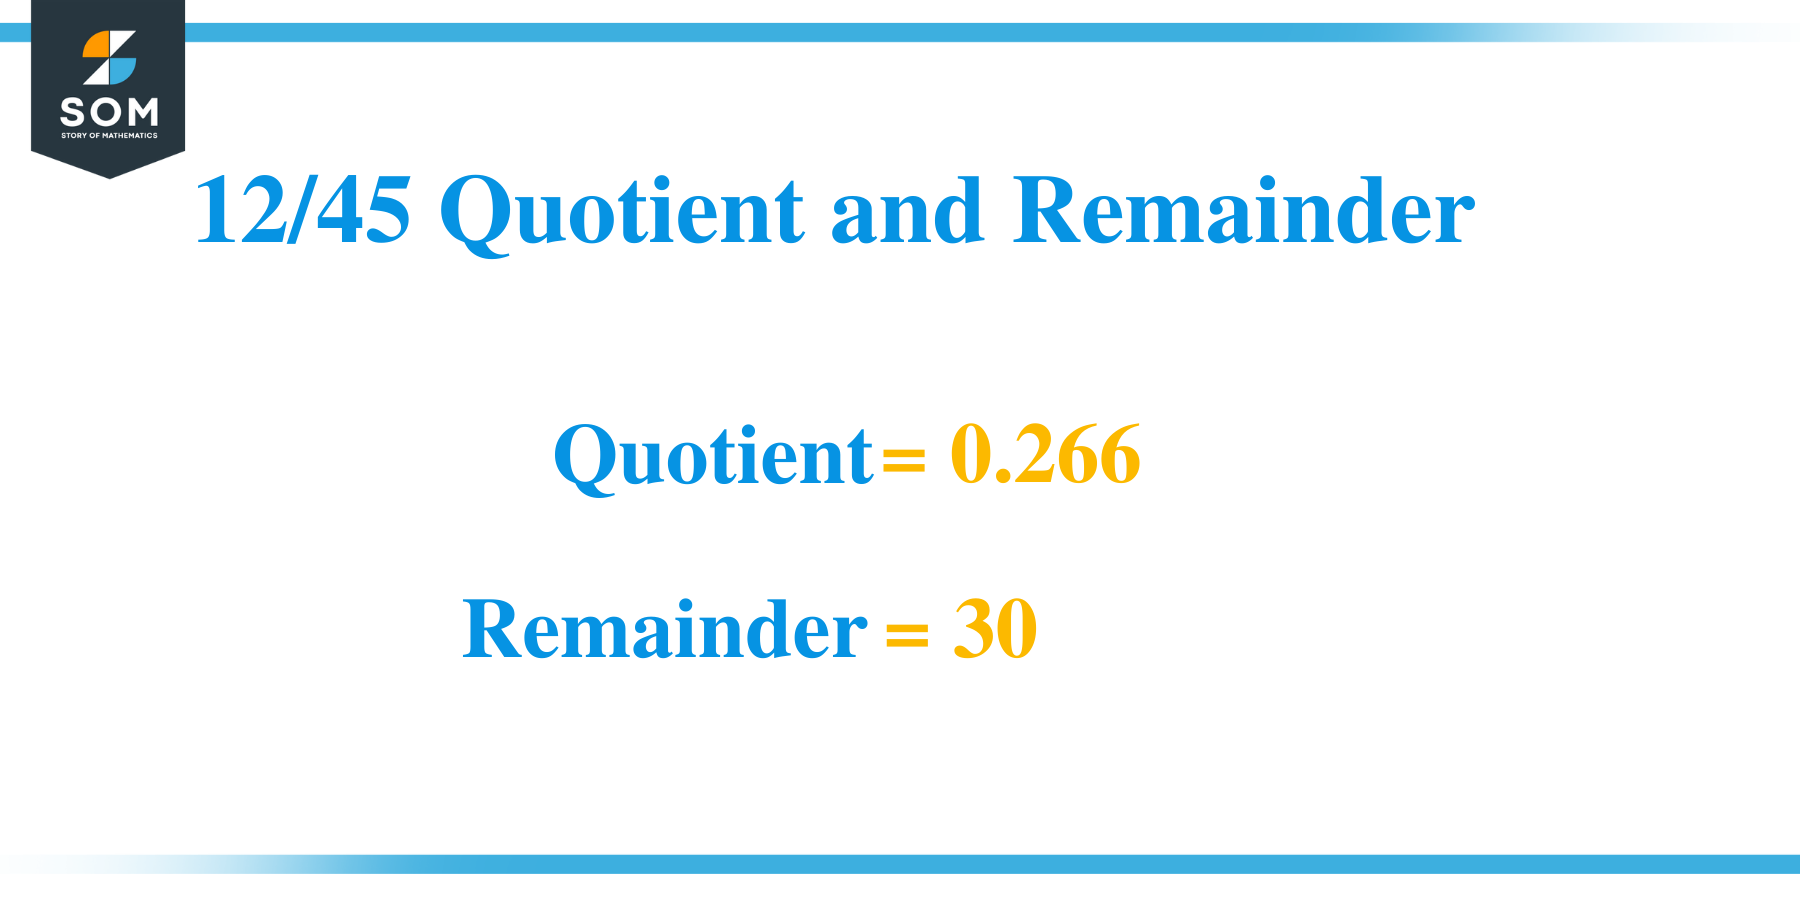 12_45 Quotient and Remainder